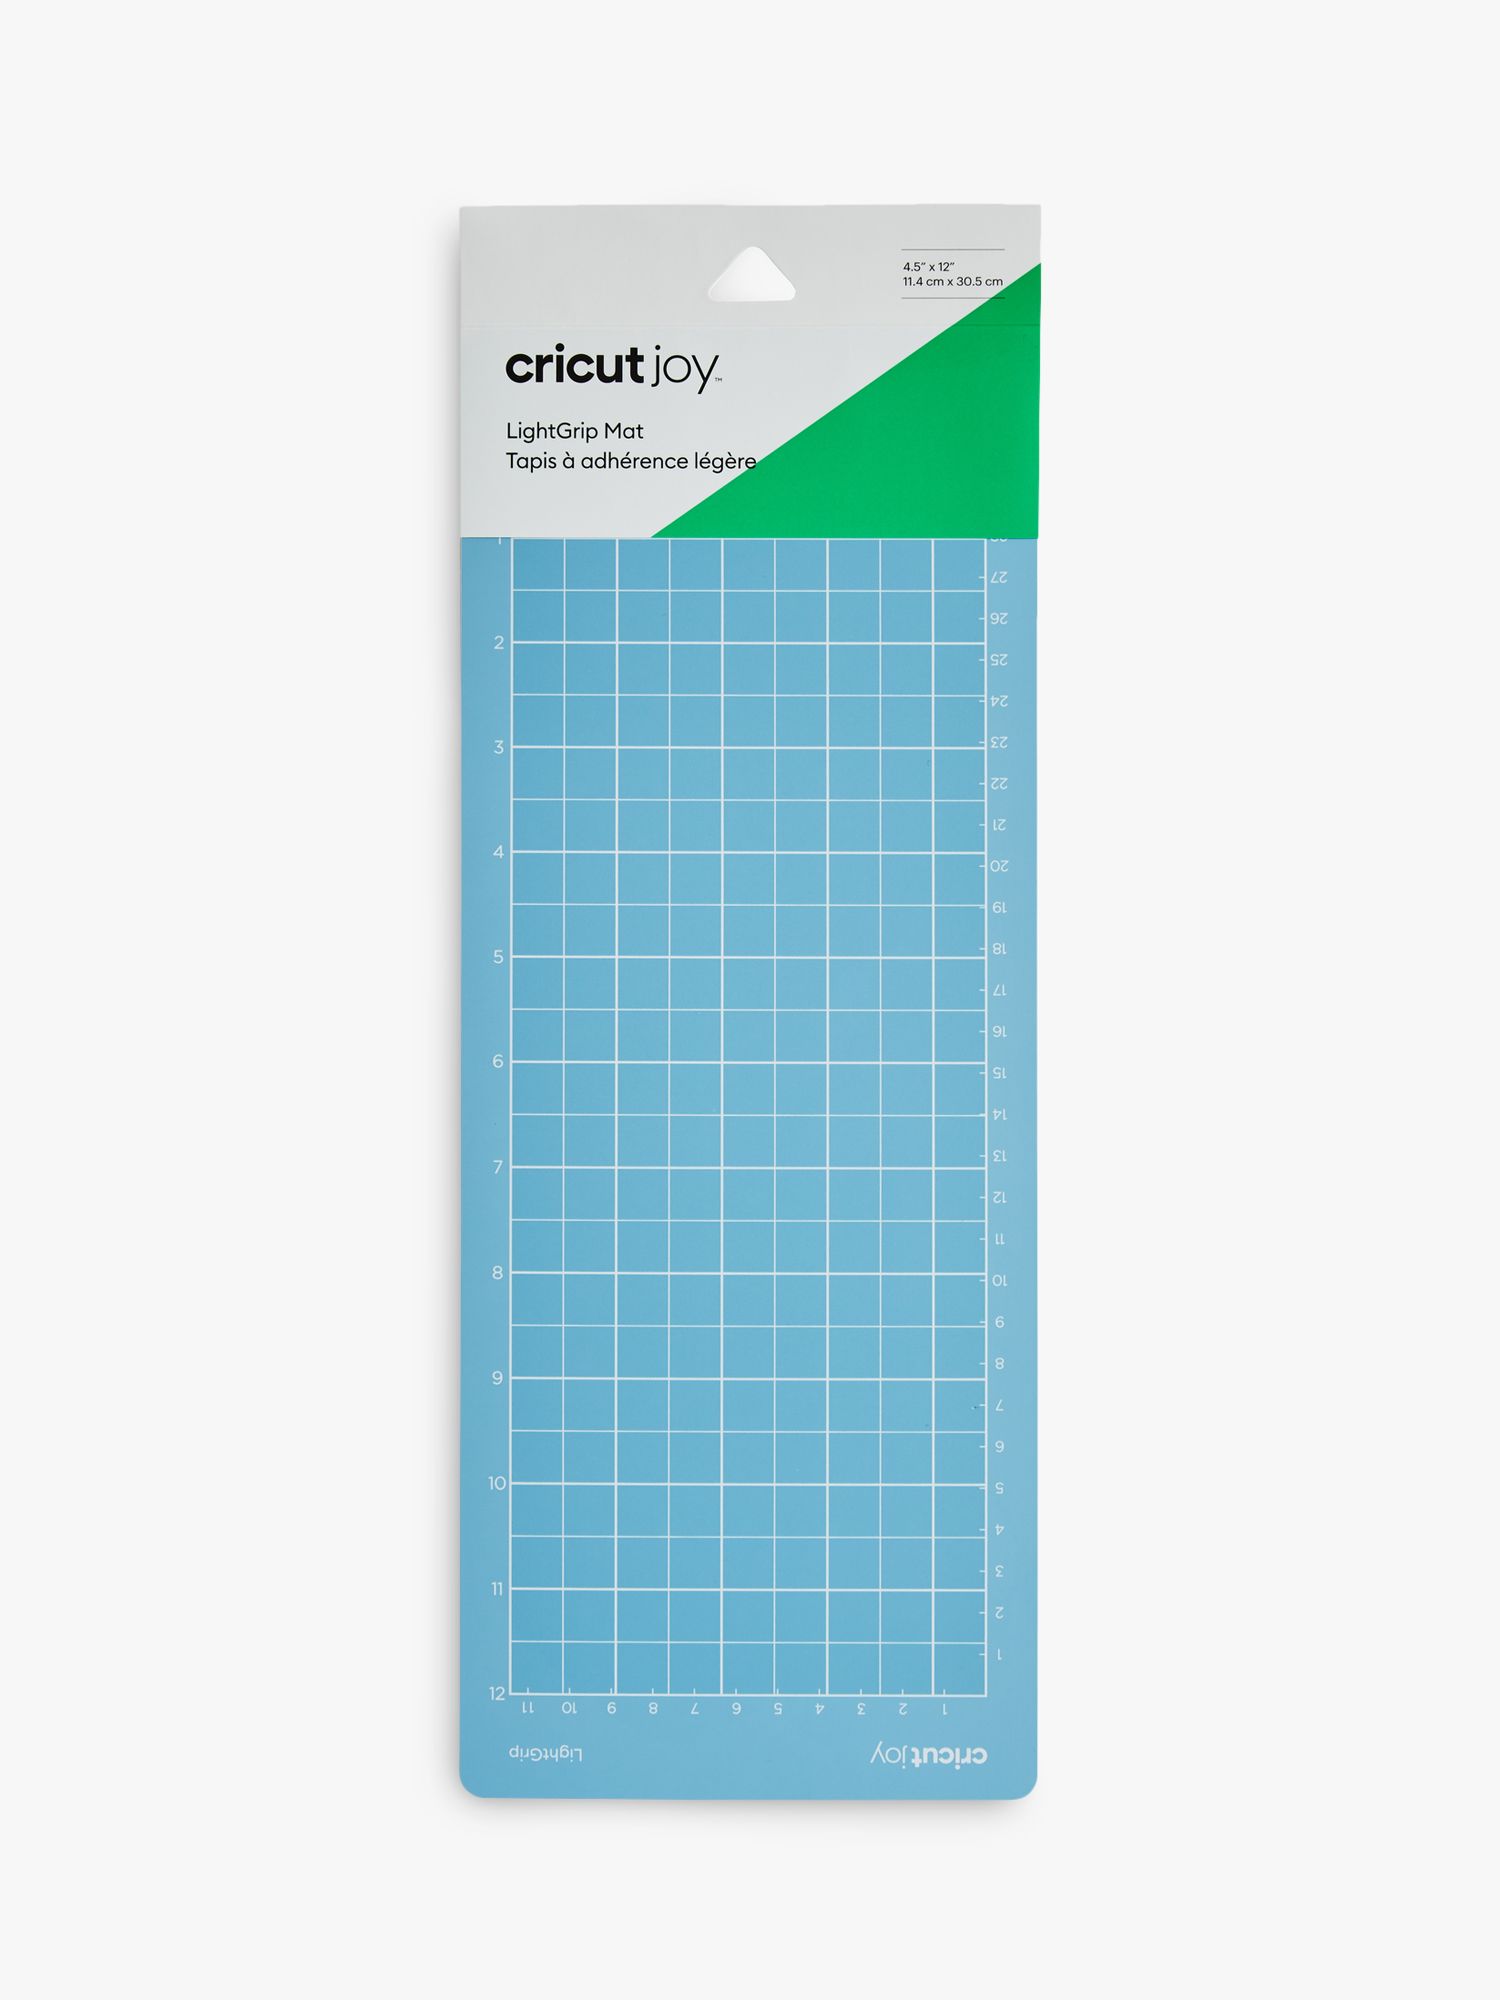 Download Cricut Joy Light Grip Mat At John Lewis Partners SVG, PNG, EPS, DXF File